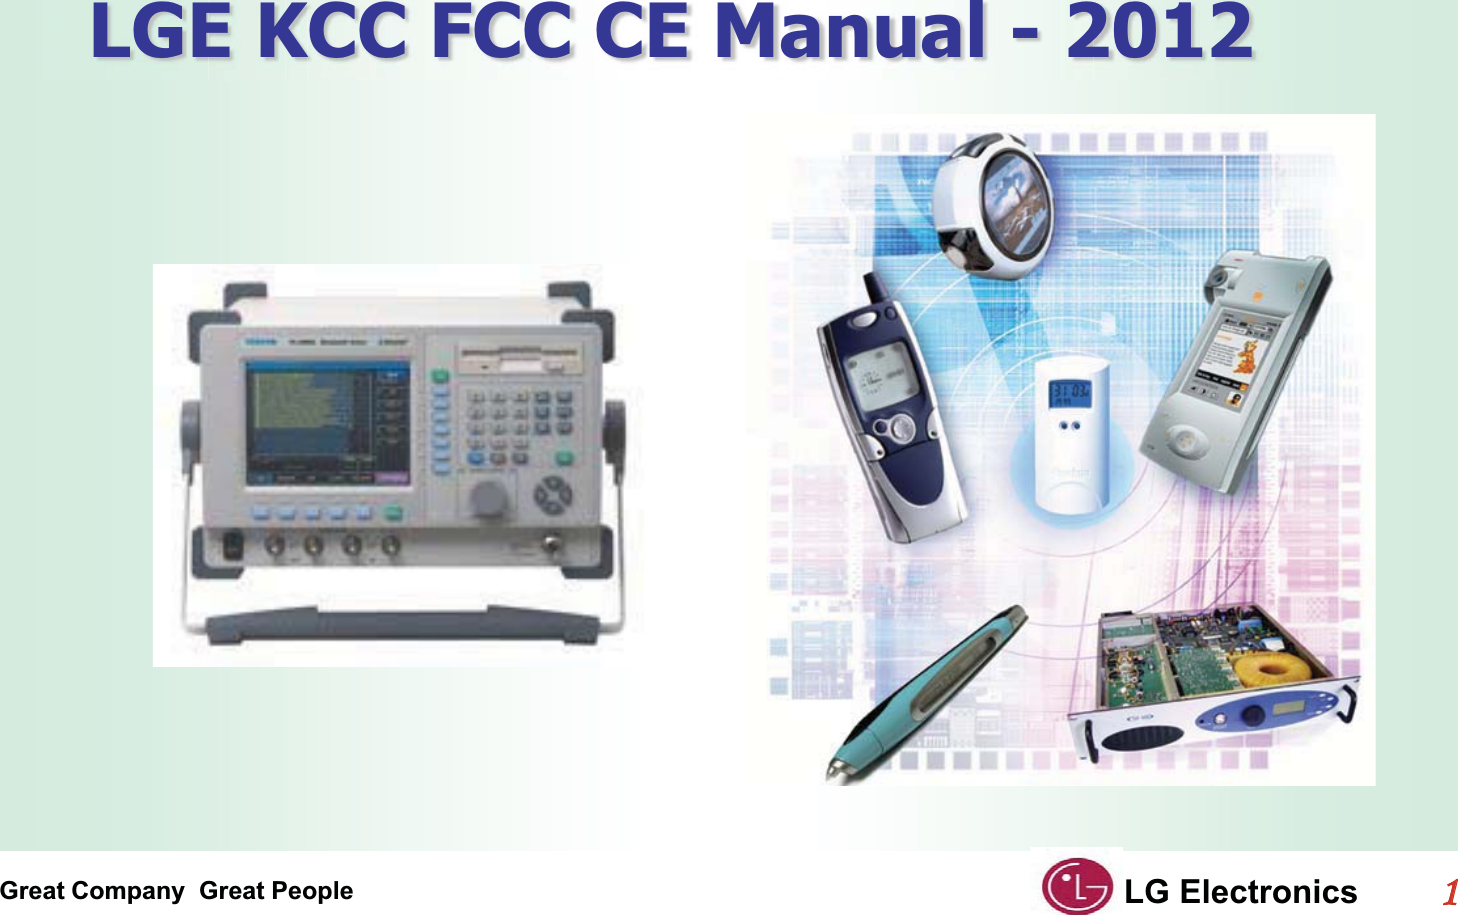 Great Company  Great People LG Electronics11  LGE KCC FCC CE Manual - 2012